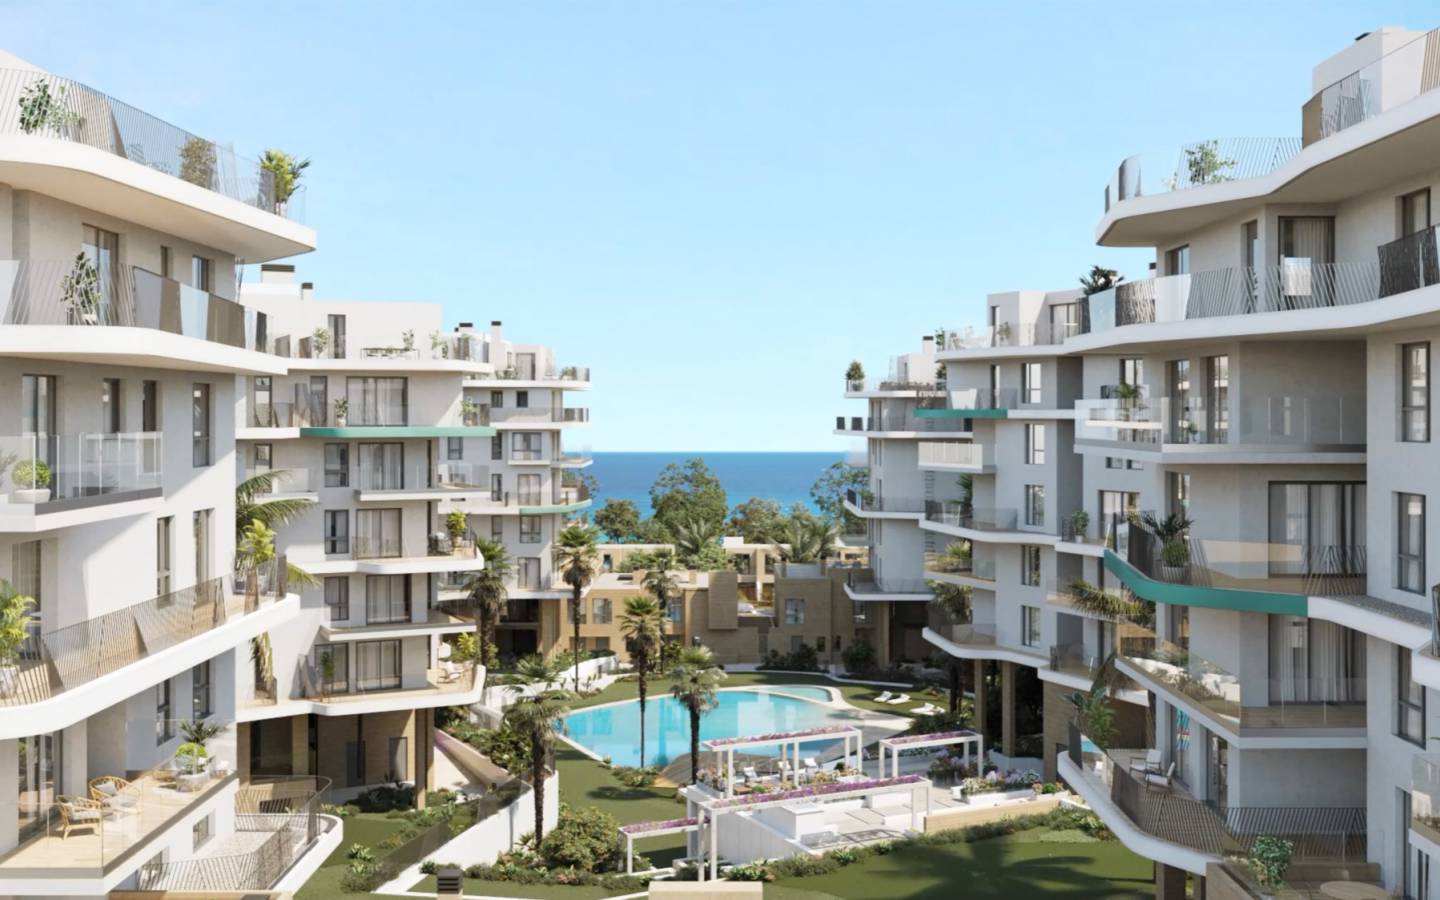 Appartements duplex en bord de mer à Villajoyosa, Alicante - Photo 1